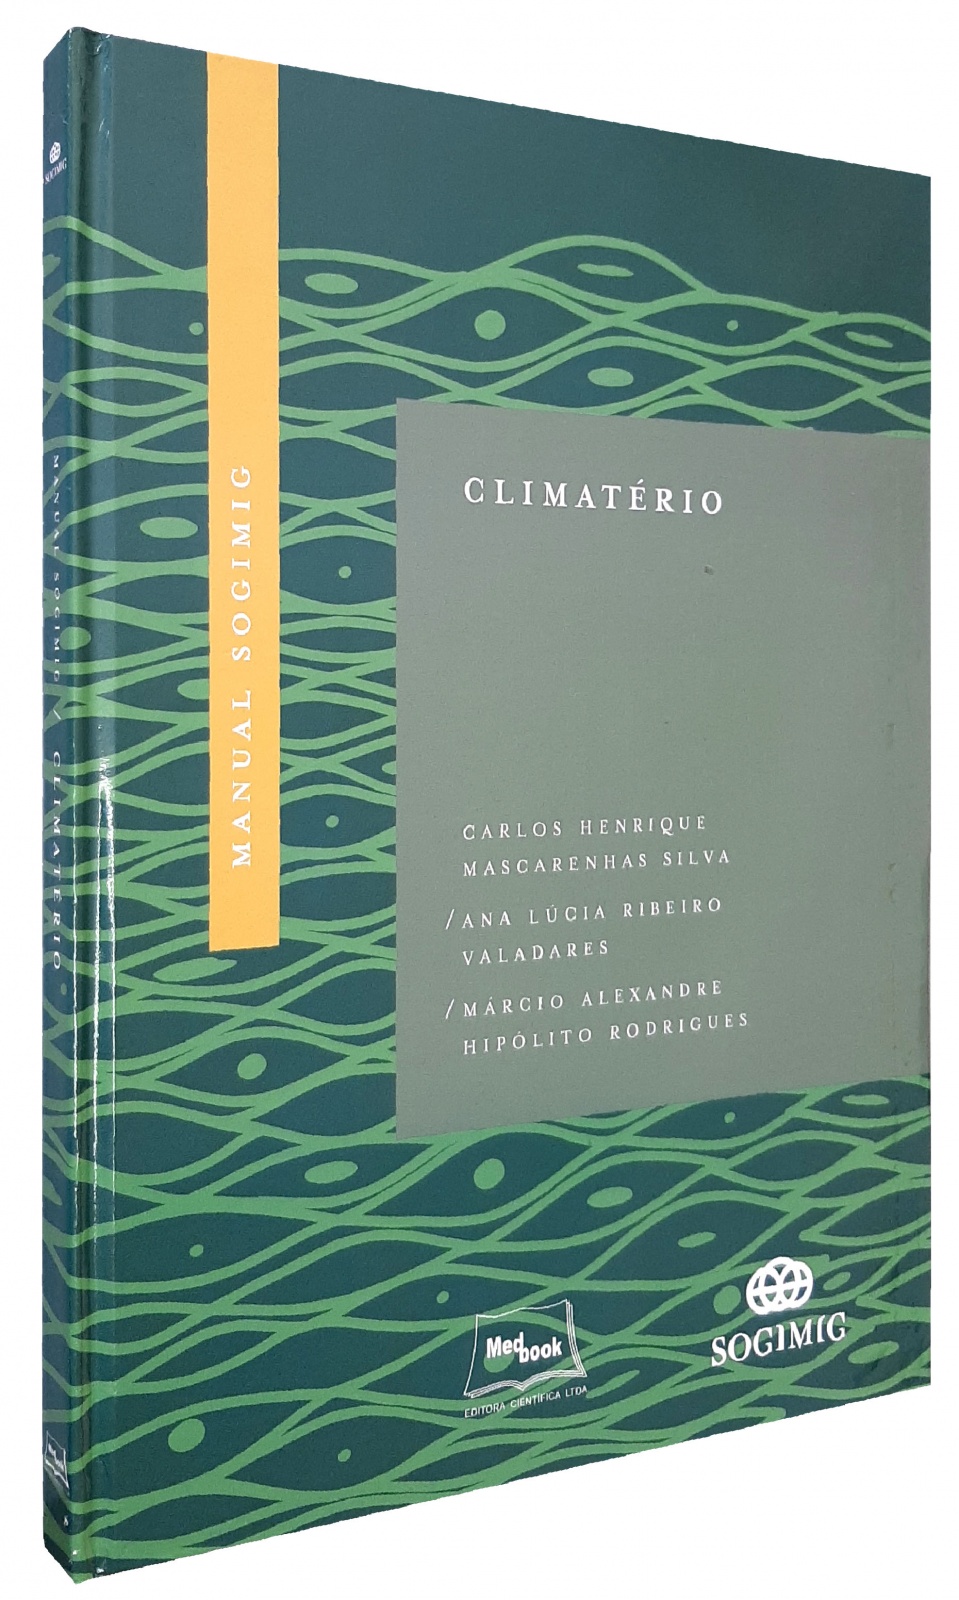 Manual Sogimig De Climatério